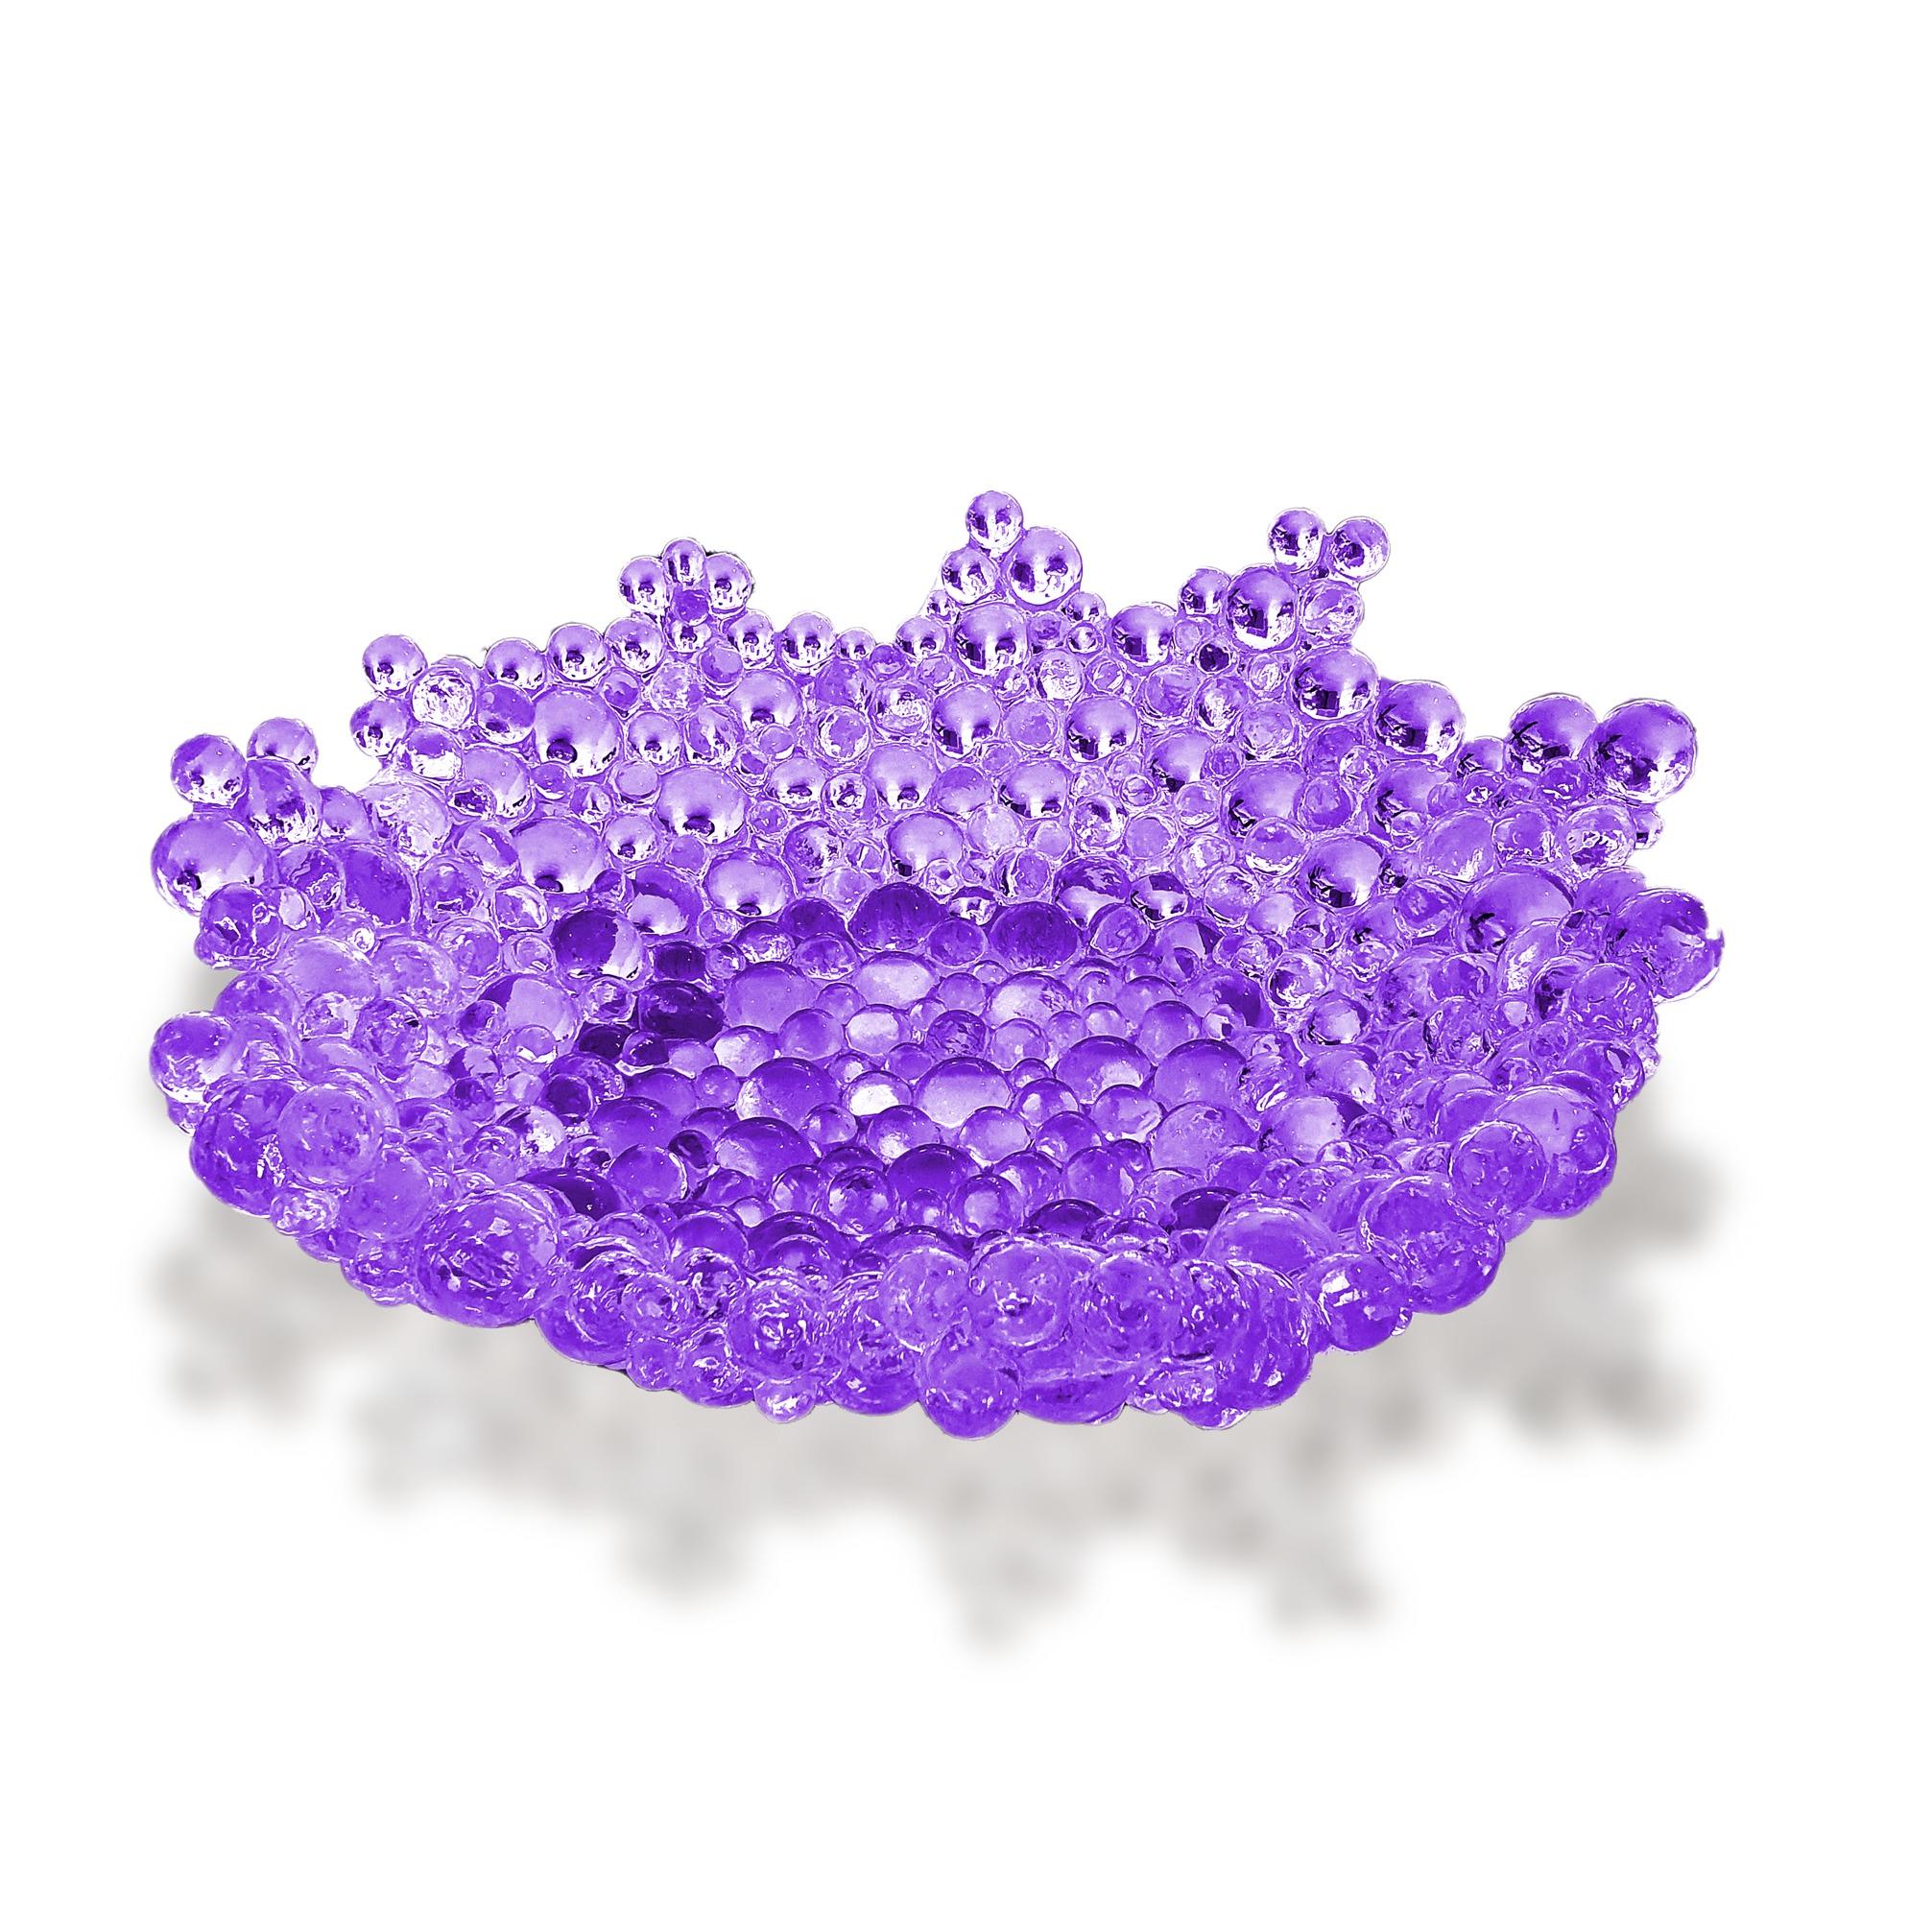 SPLASH- BUCKET, eine lila Harzkübel